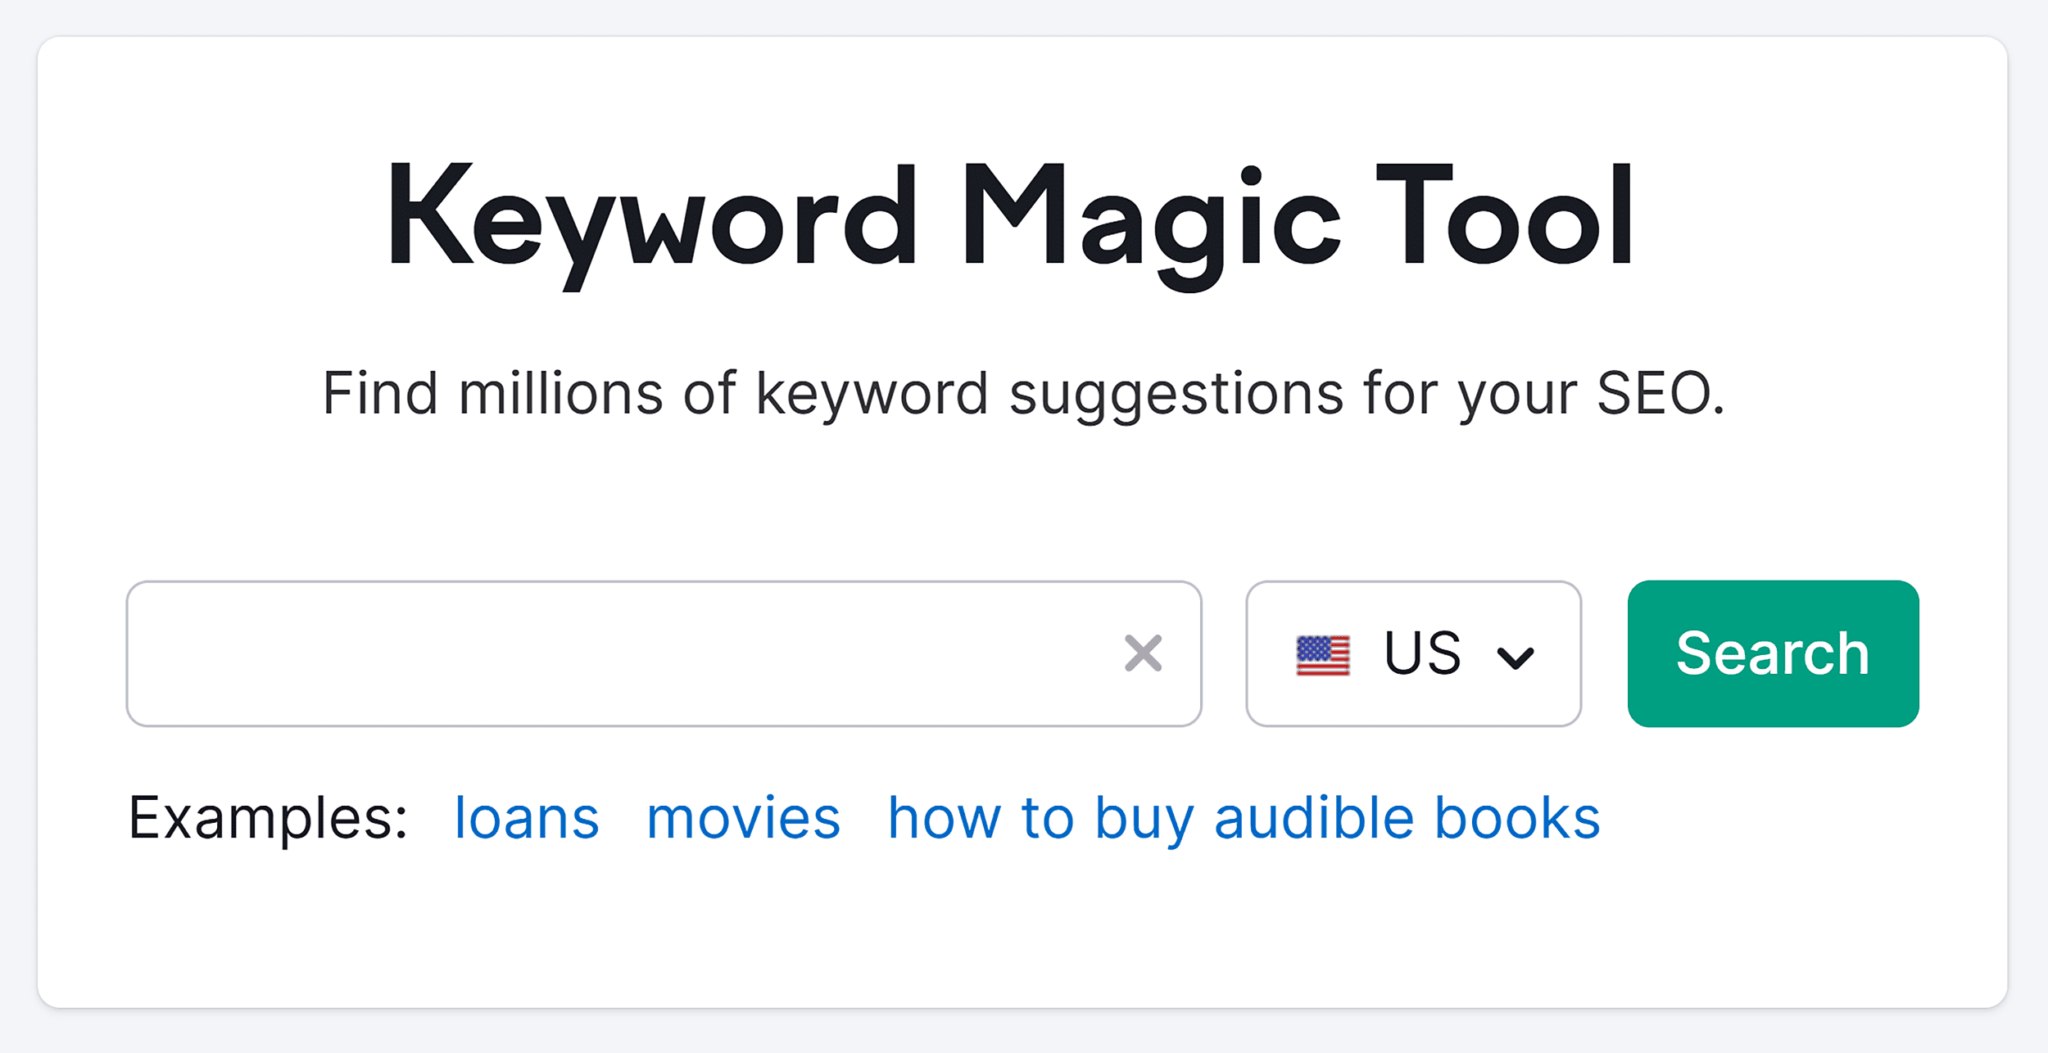 semrush-keyword-magic-tool-1 29 Top Digital Marketing Tools for Every Budget